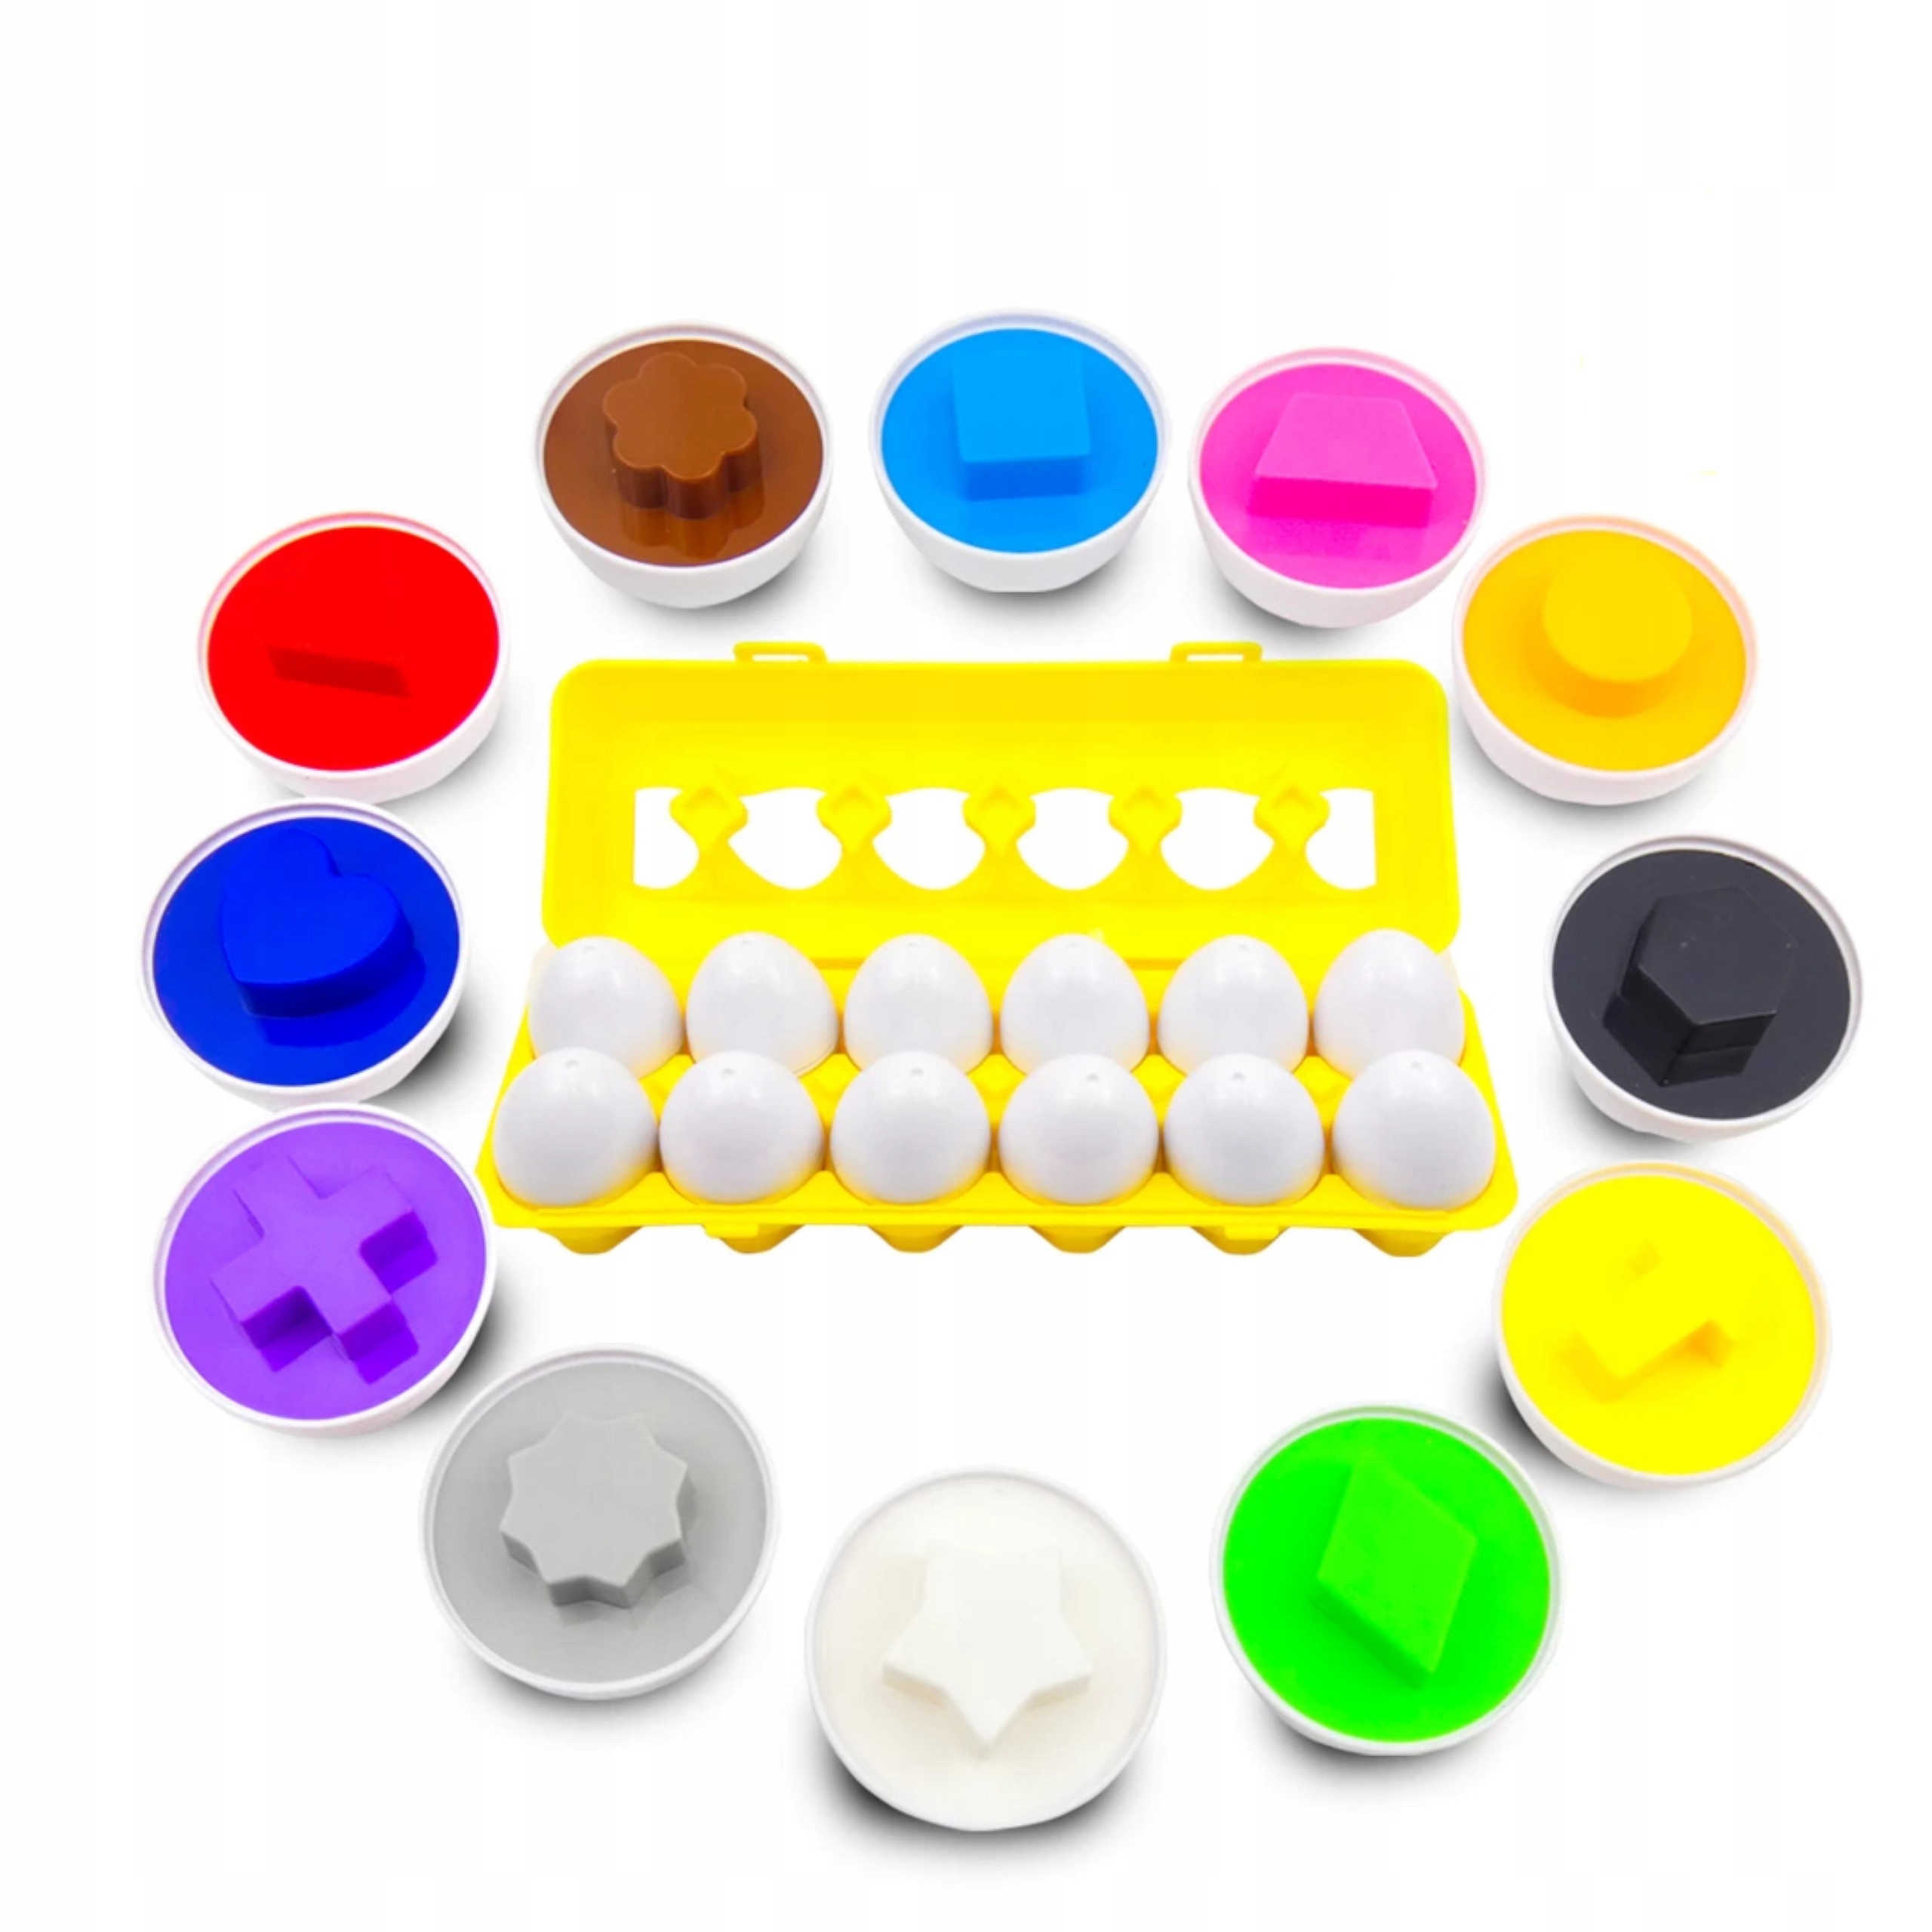 Układanka sorter jajka Montessori kształty LB33-3 Wiek dziecka 3 lata +